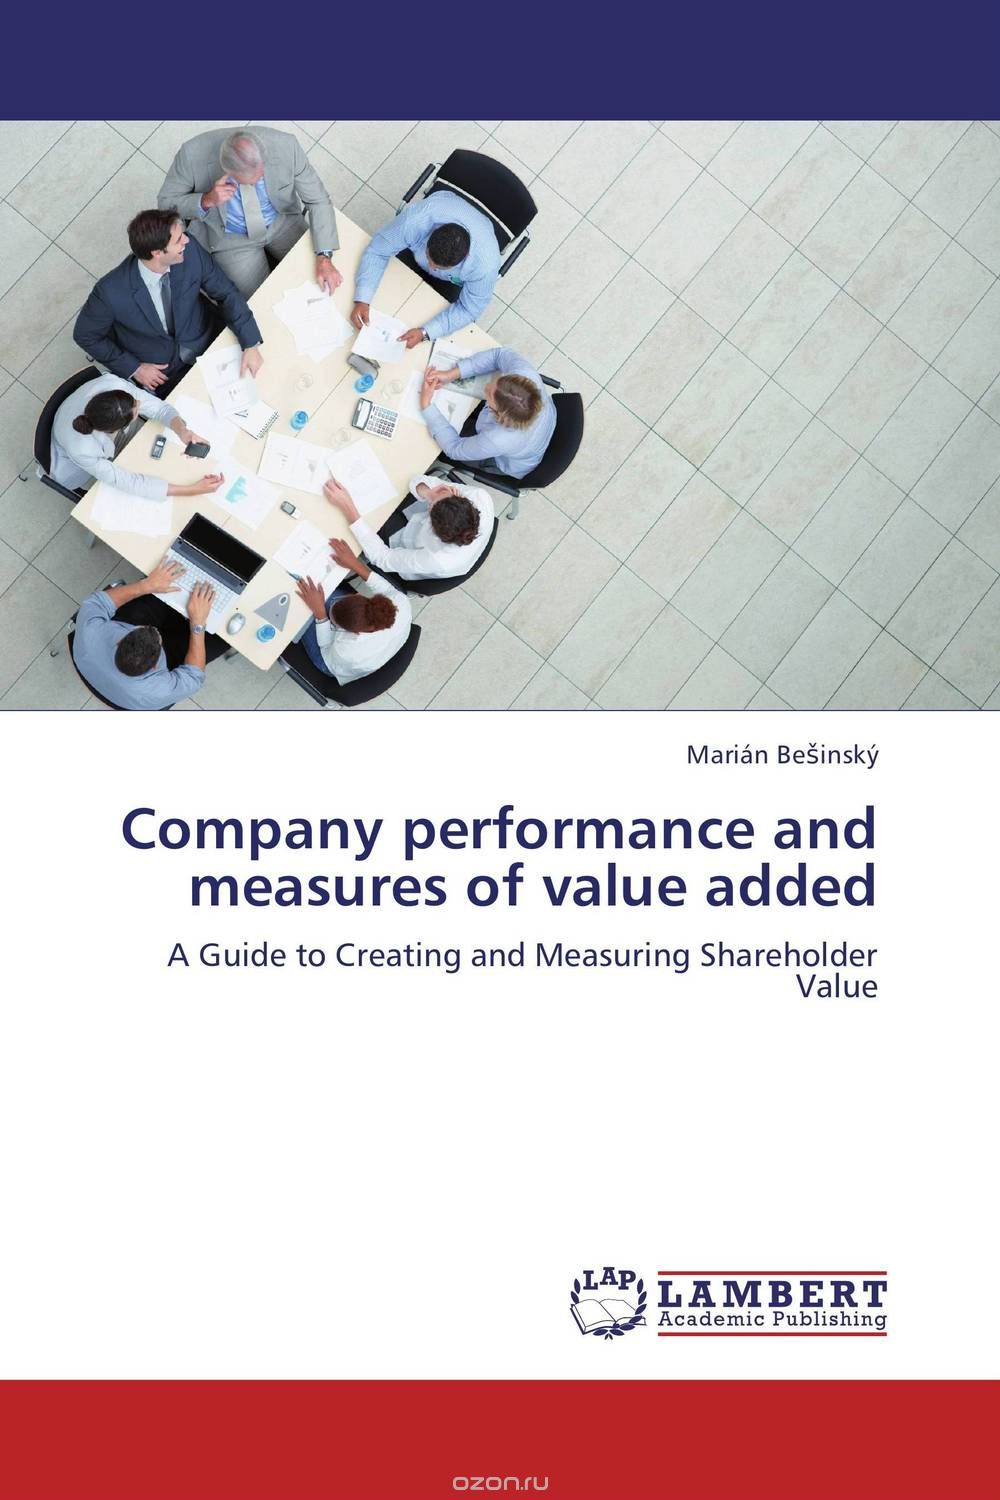 Скачать книгу "Company performance and measures of value added"